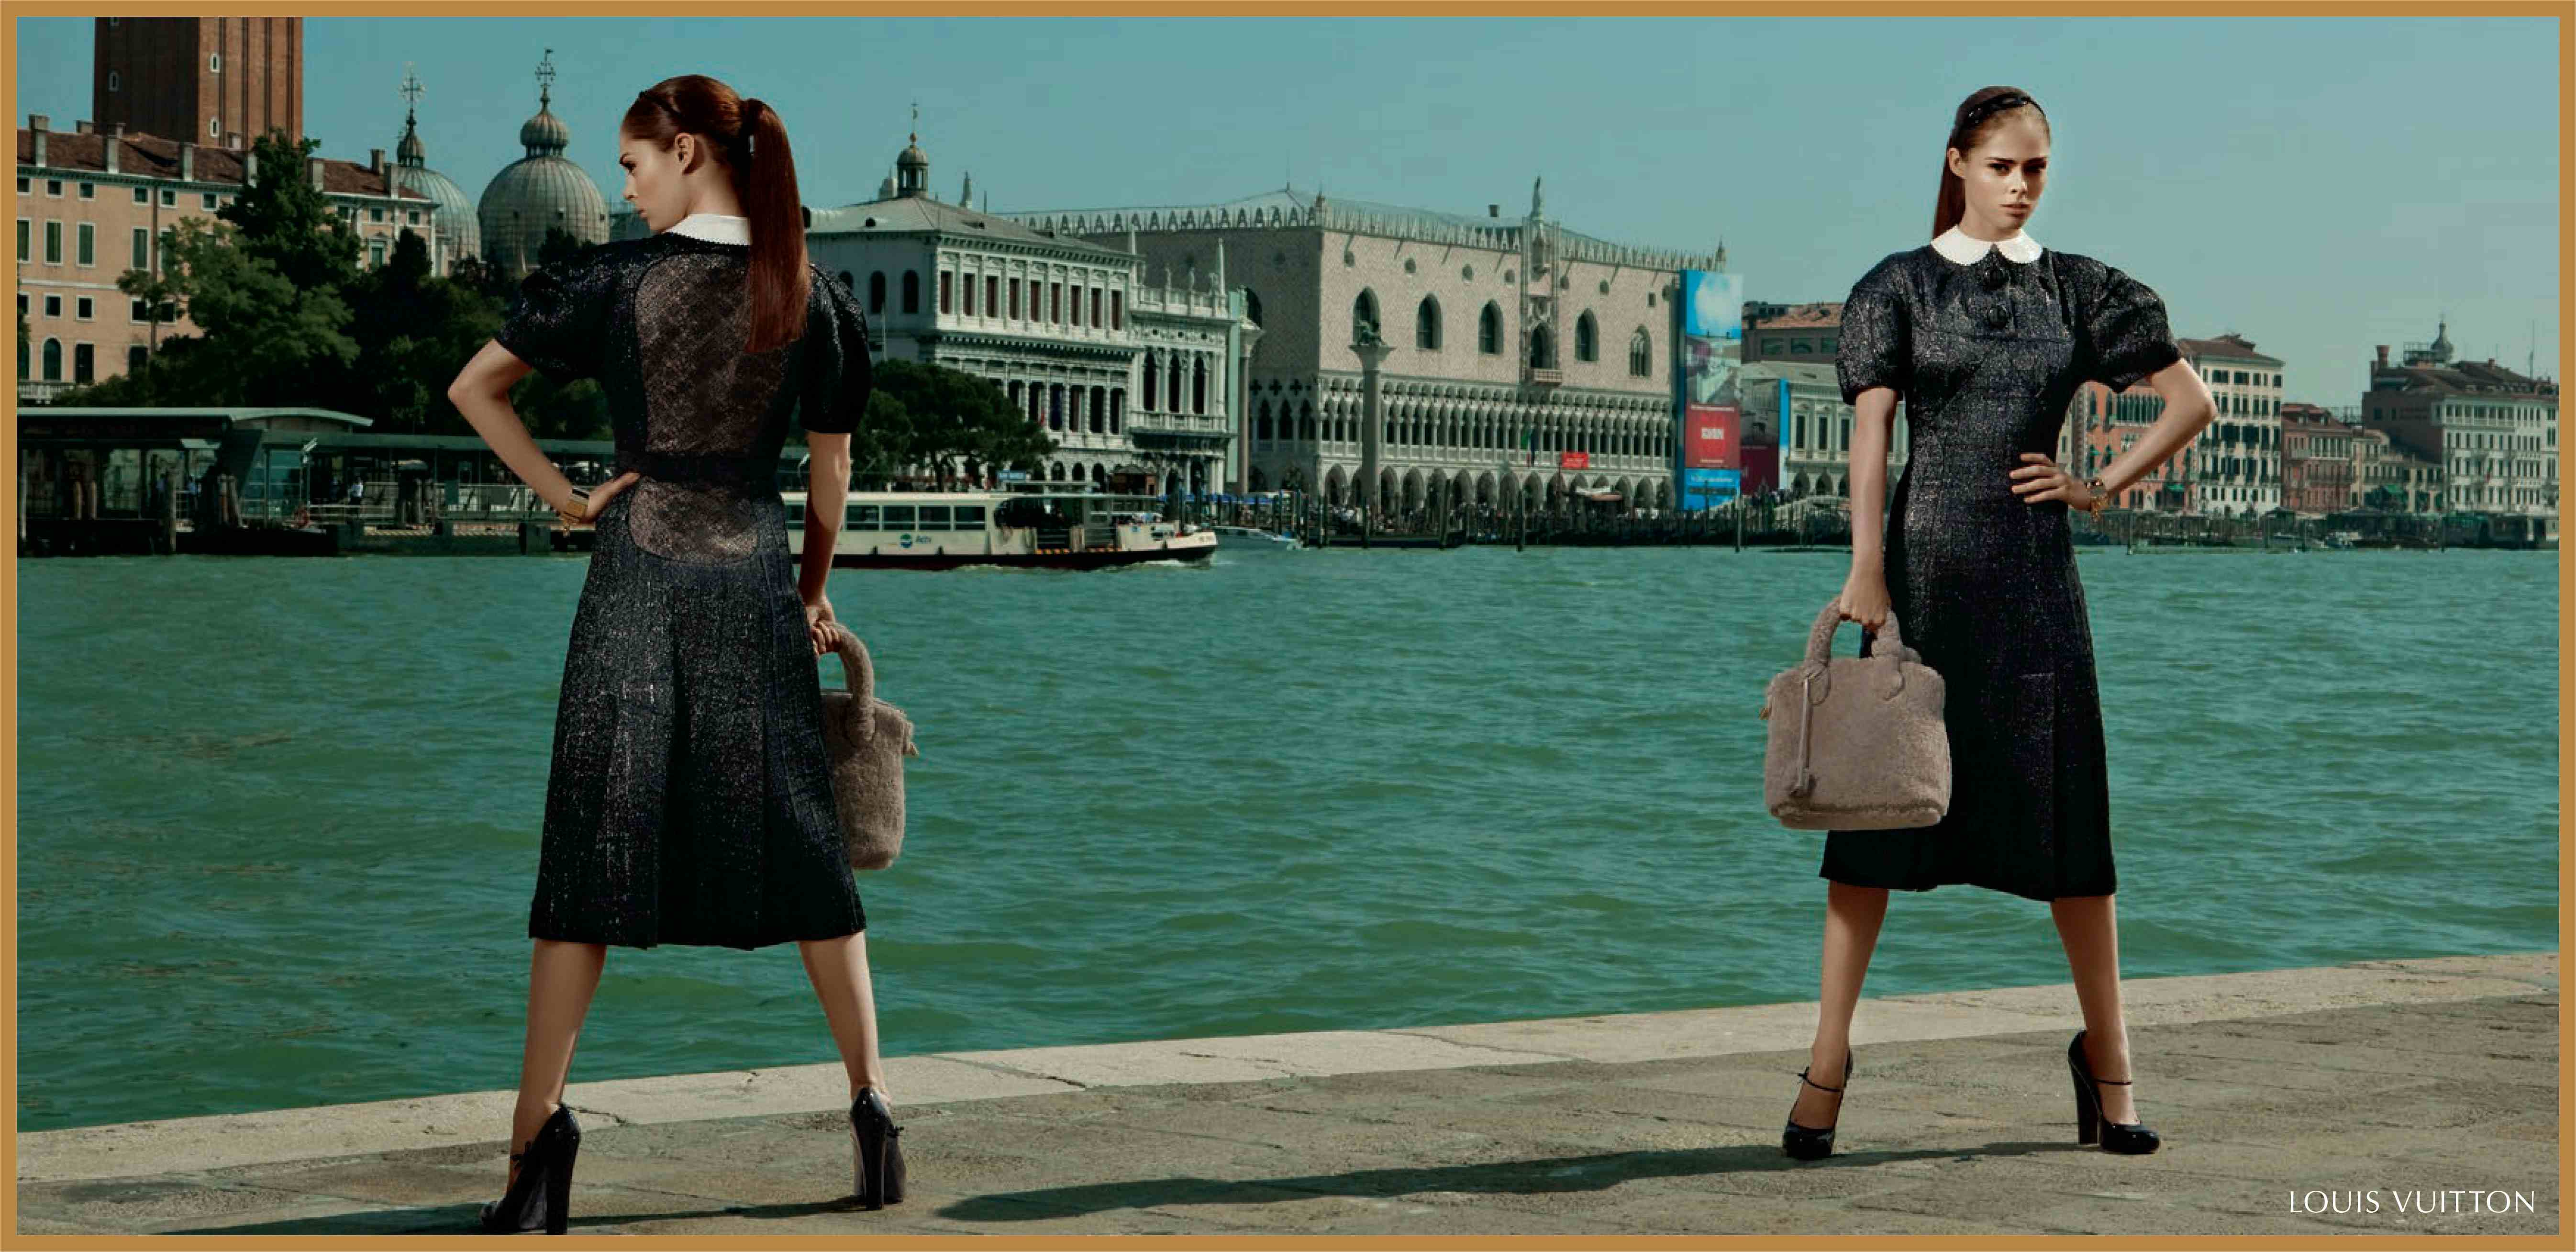 AMERICANA MANHASSET - Fall 2011
Photographer: Laspata & Decaro
Model: Coco Rocha
Stylist: Tara Mooser
Location: Venice - Italy